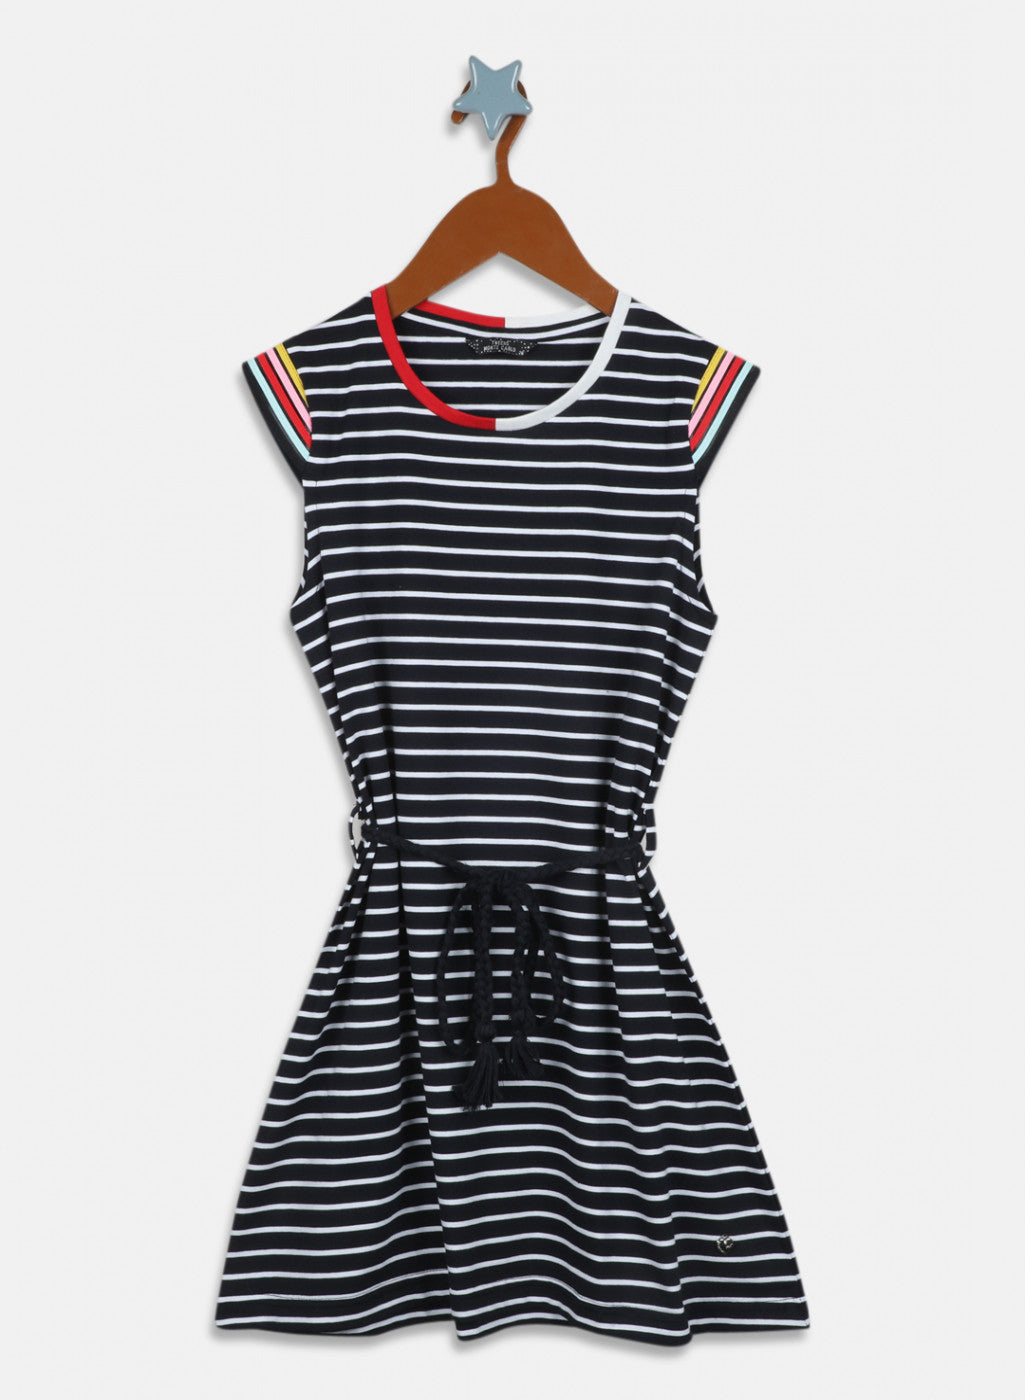 Buy Girls Black & White Stripe Dress Online in India - Monte Carlo